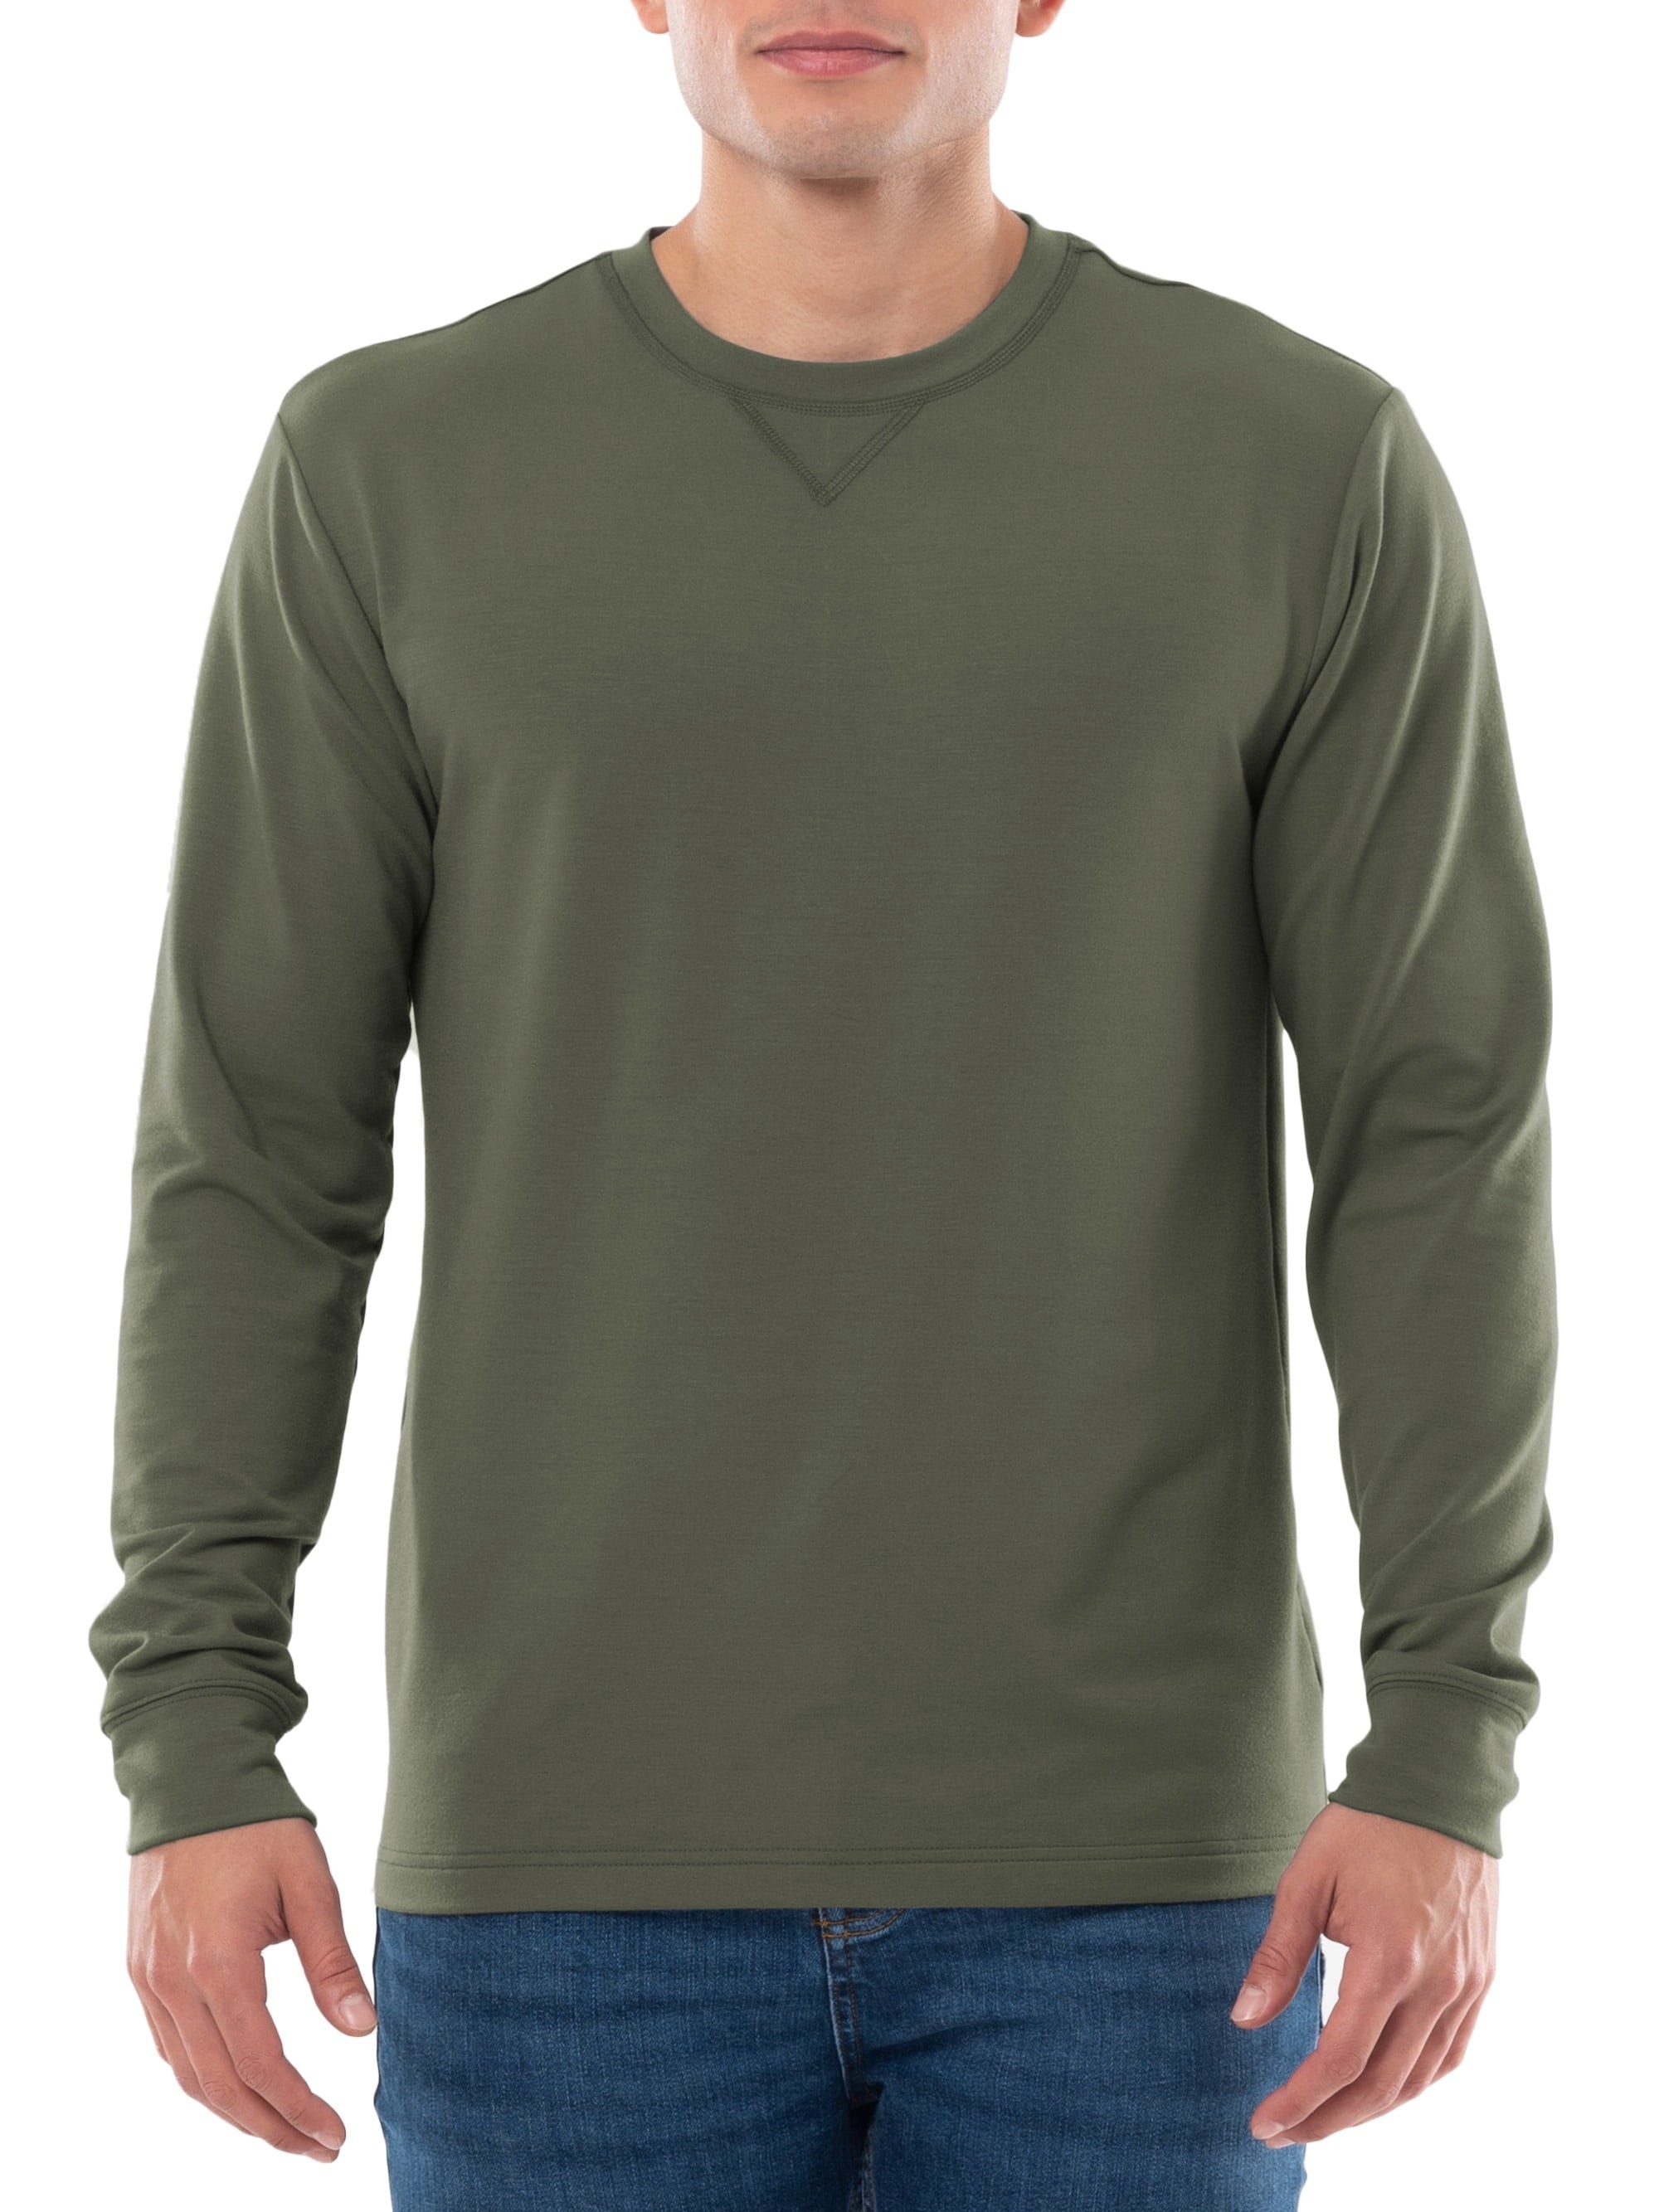 Men's Thistletown Hills™ Long Sleeve Crew Shirt